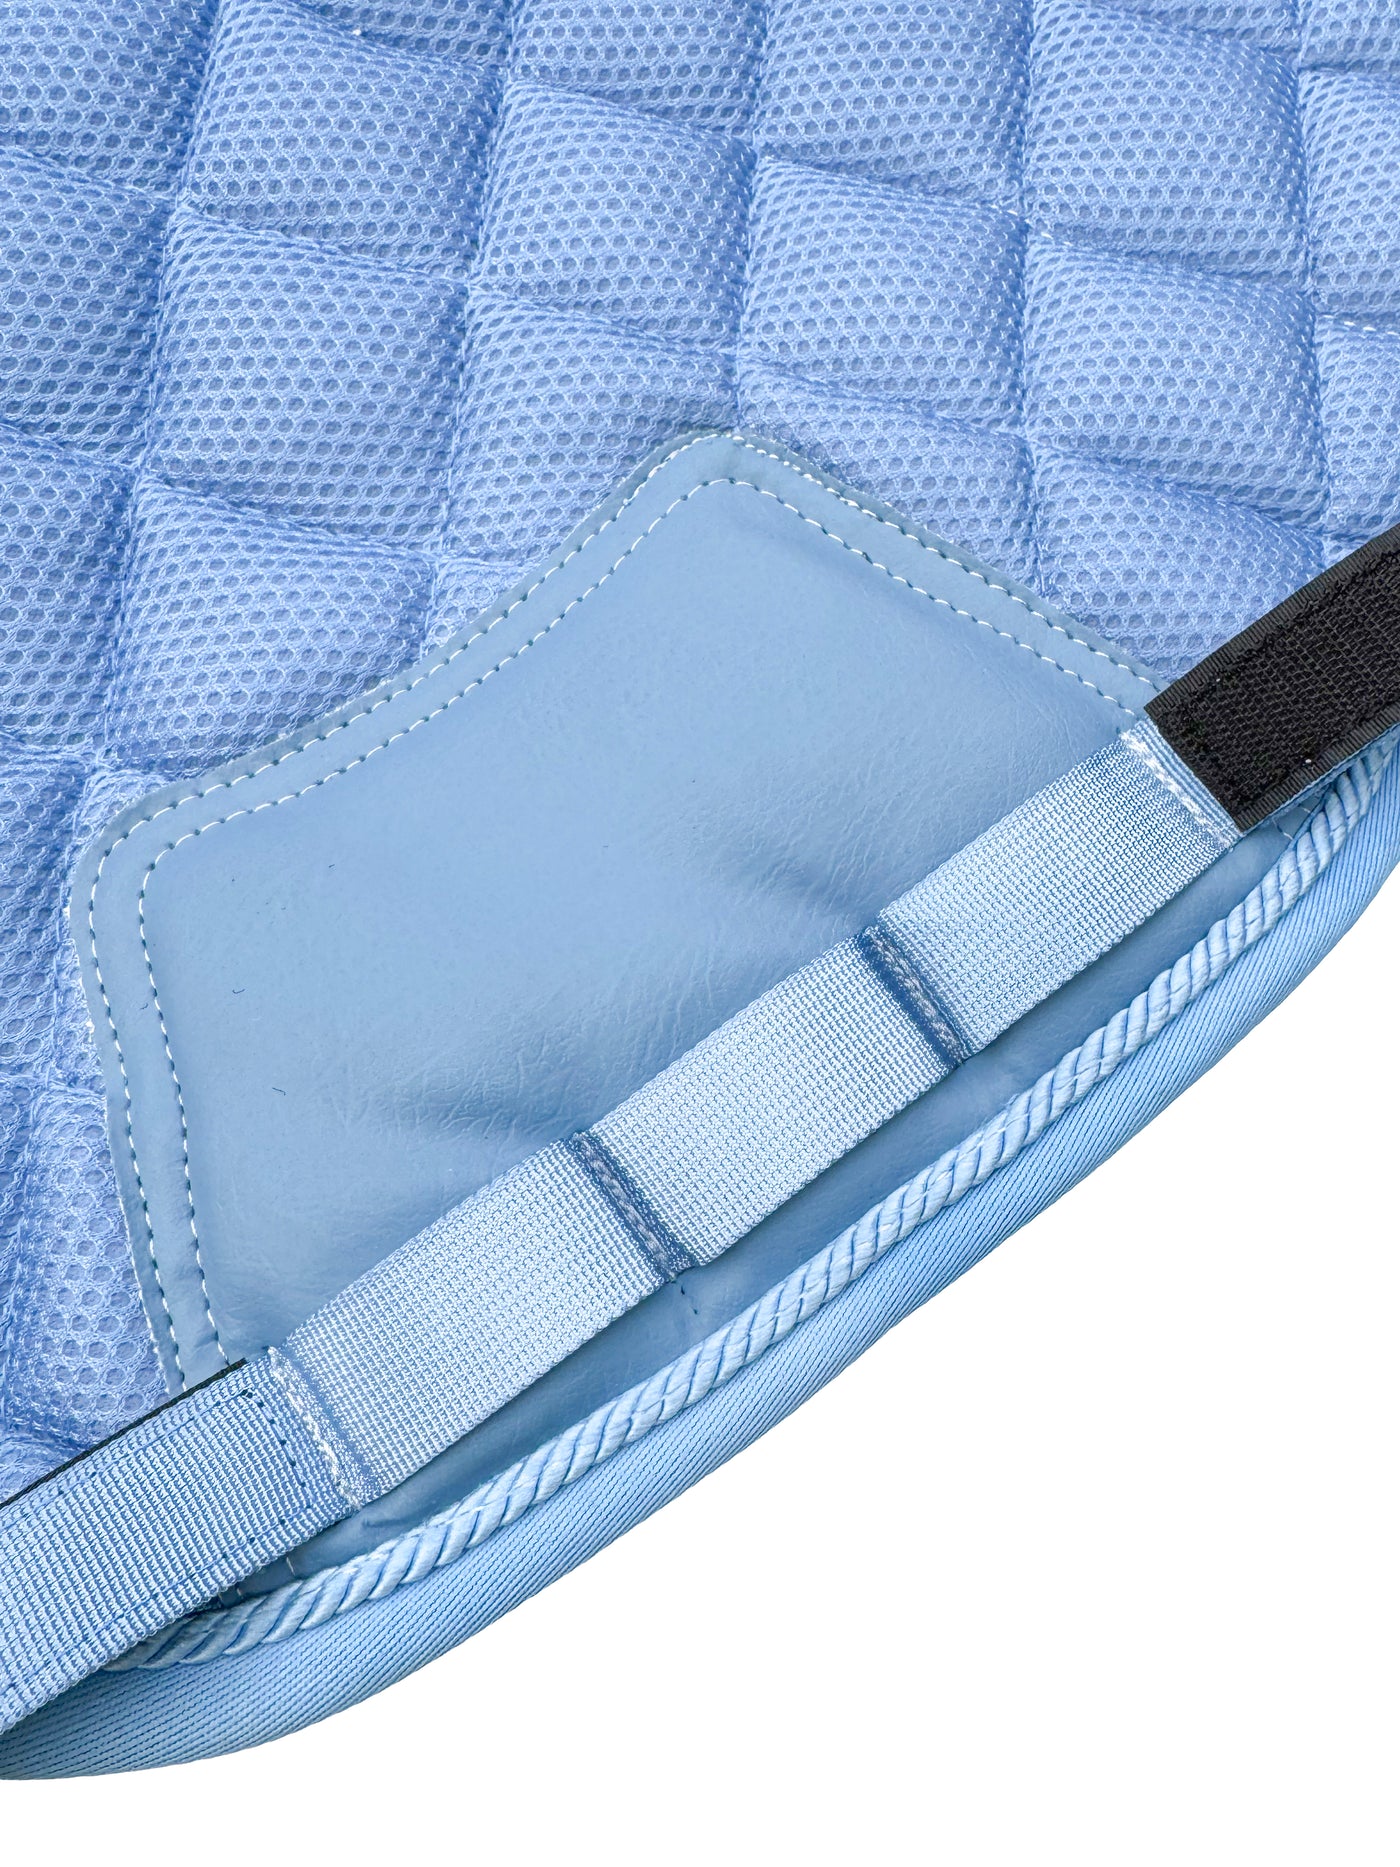 Baby Blue Airflow Saddle Pad Dressage 2.0